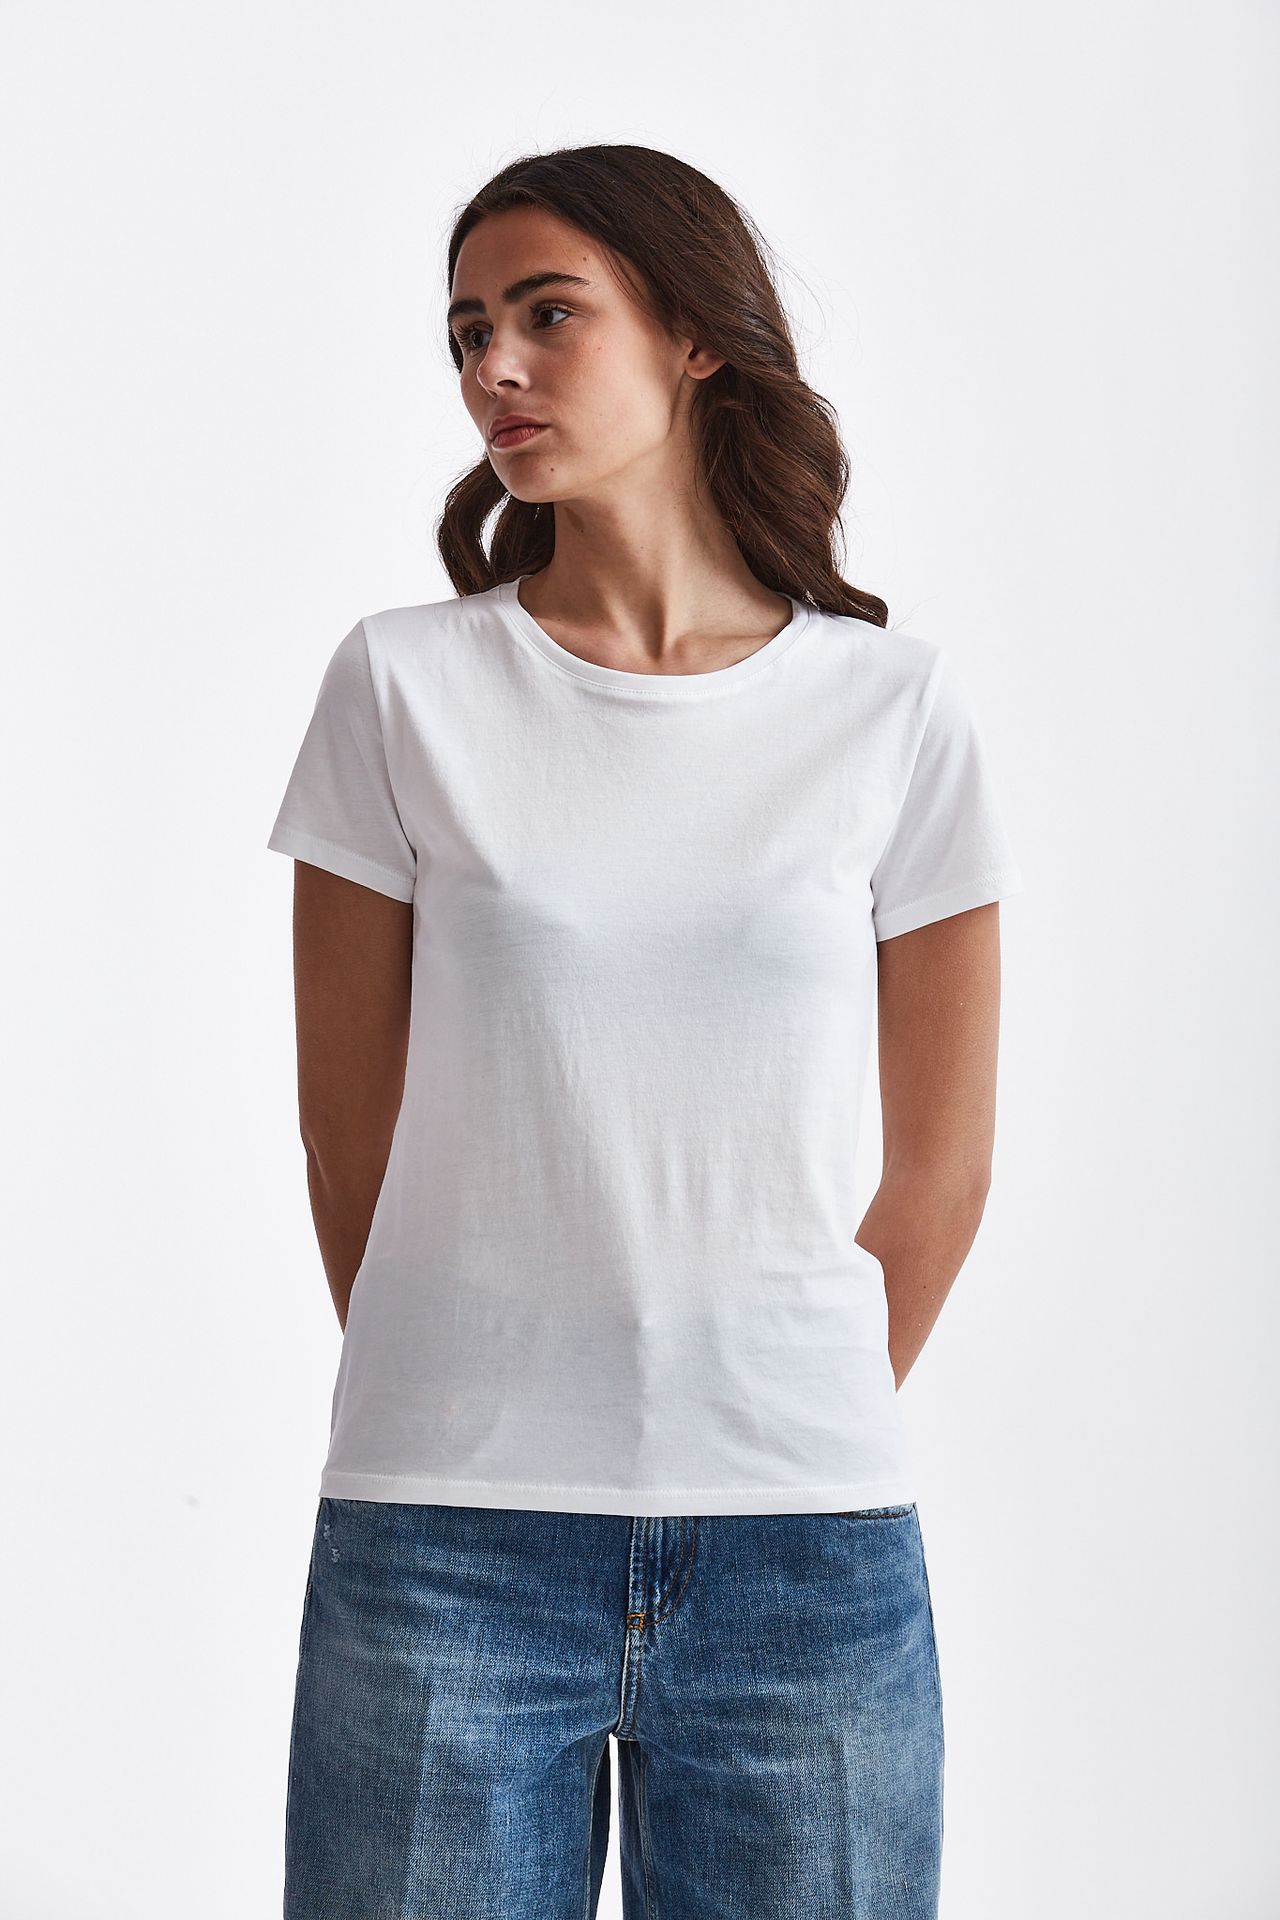 T-shirt MARIBEL in cotone bianco